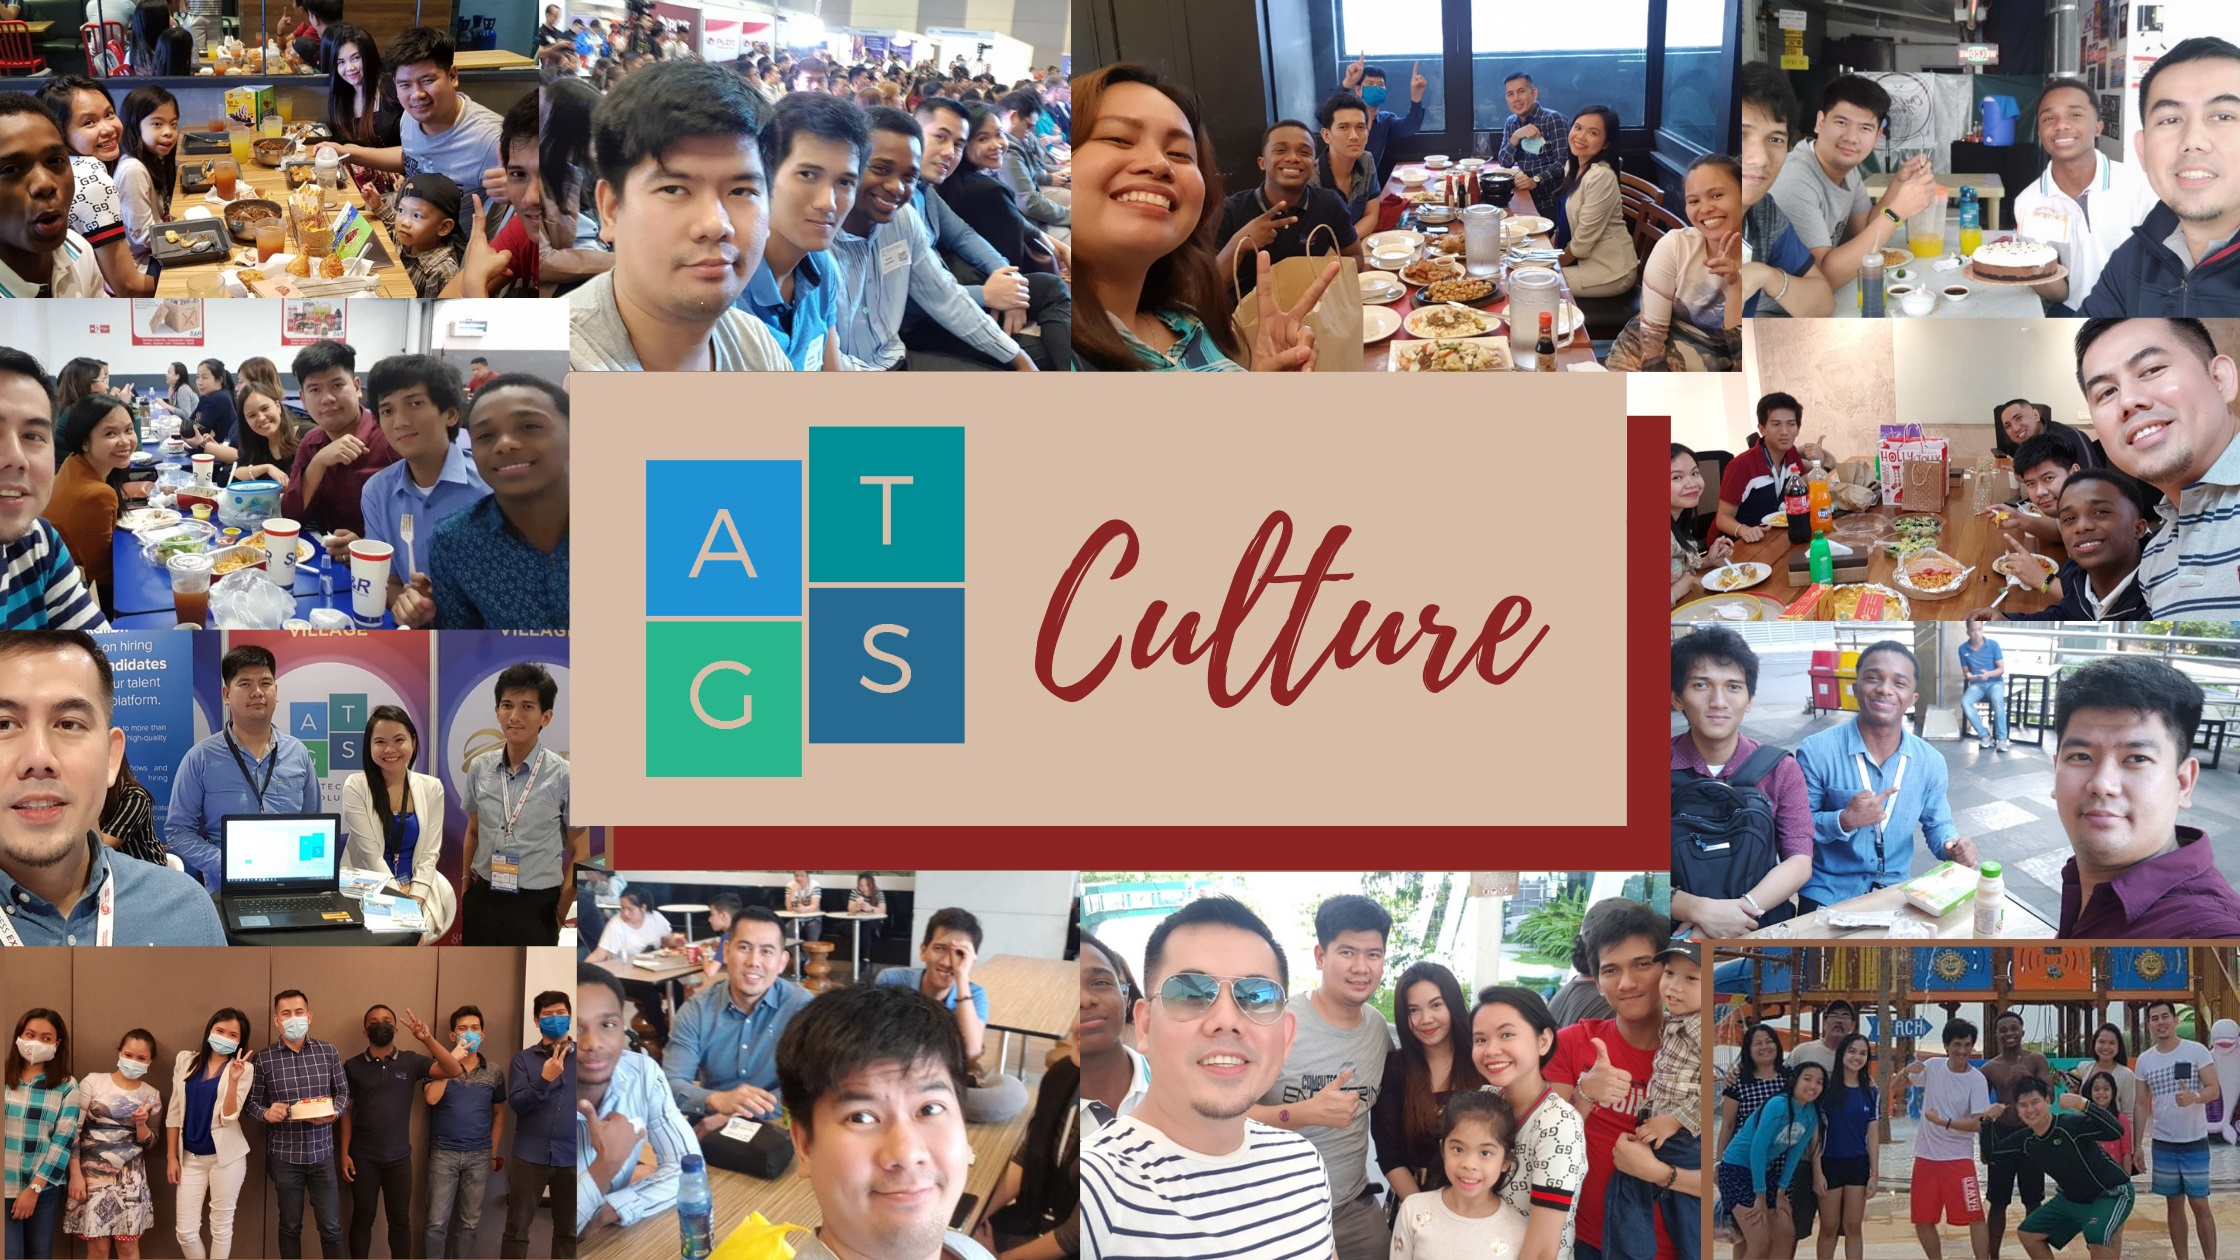 ATGS Culture 1-1607854062.jpg